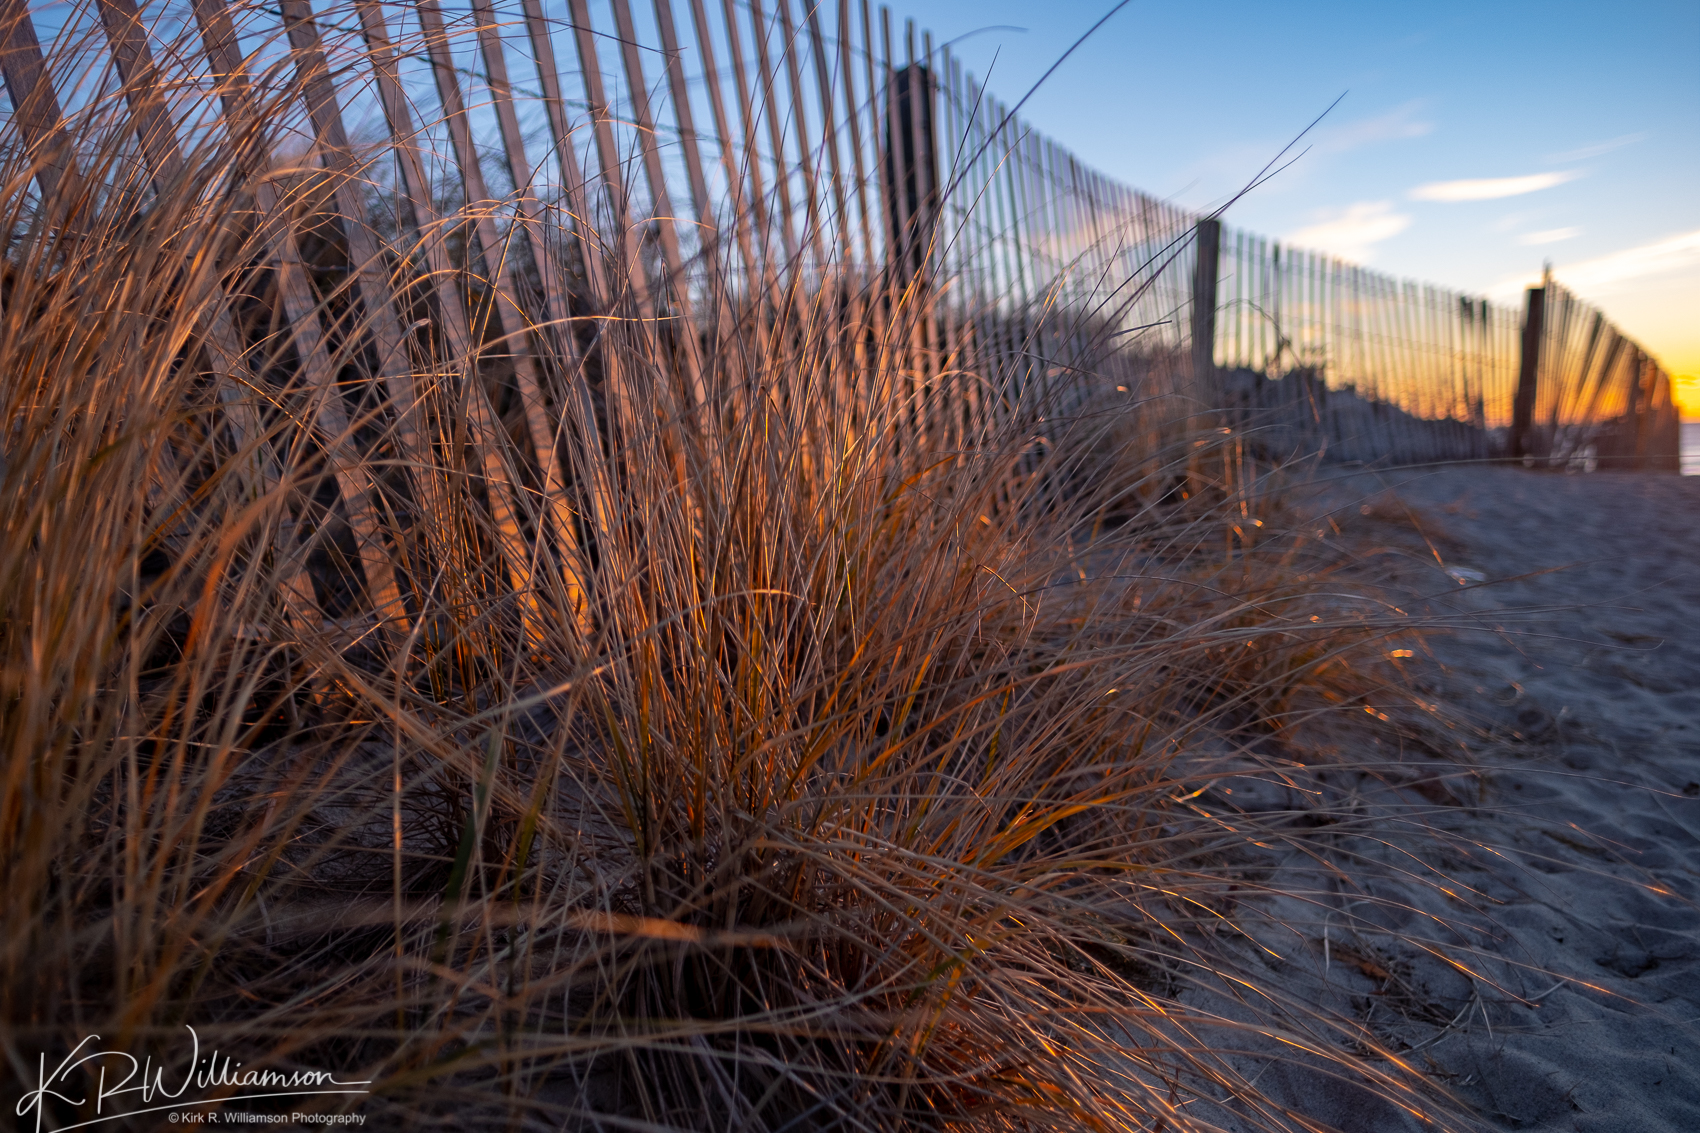 Dune grass at sunrise